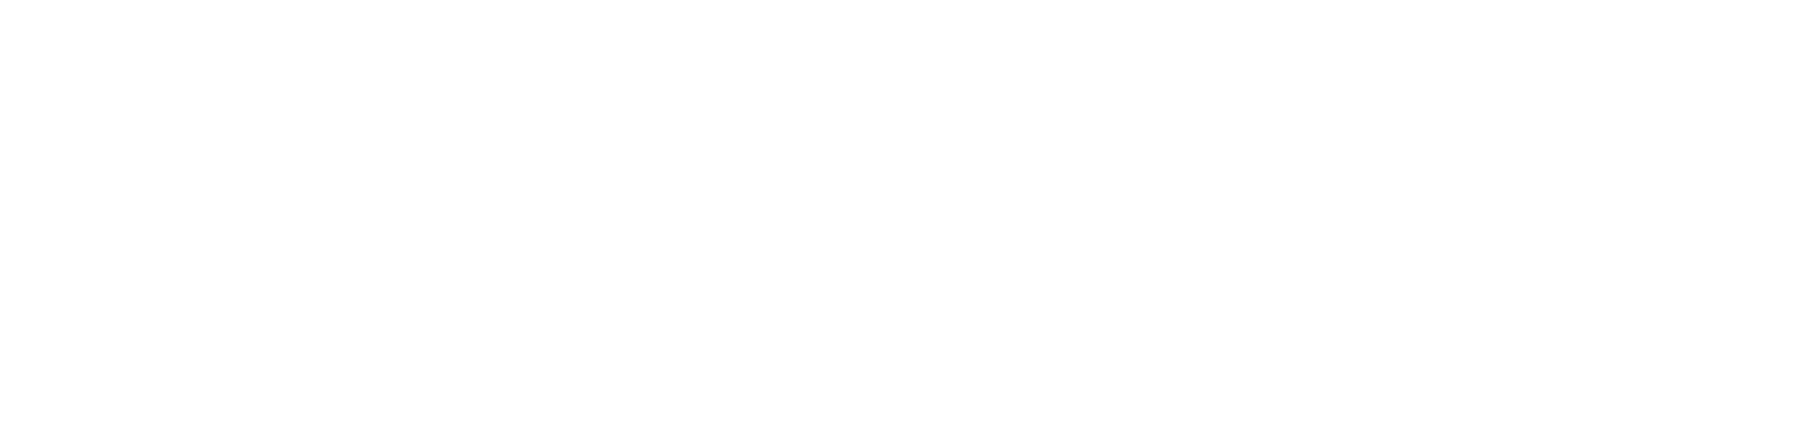 RK Global Access